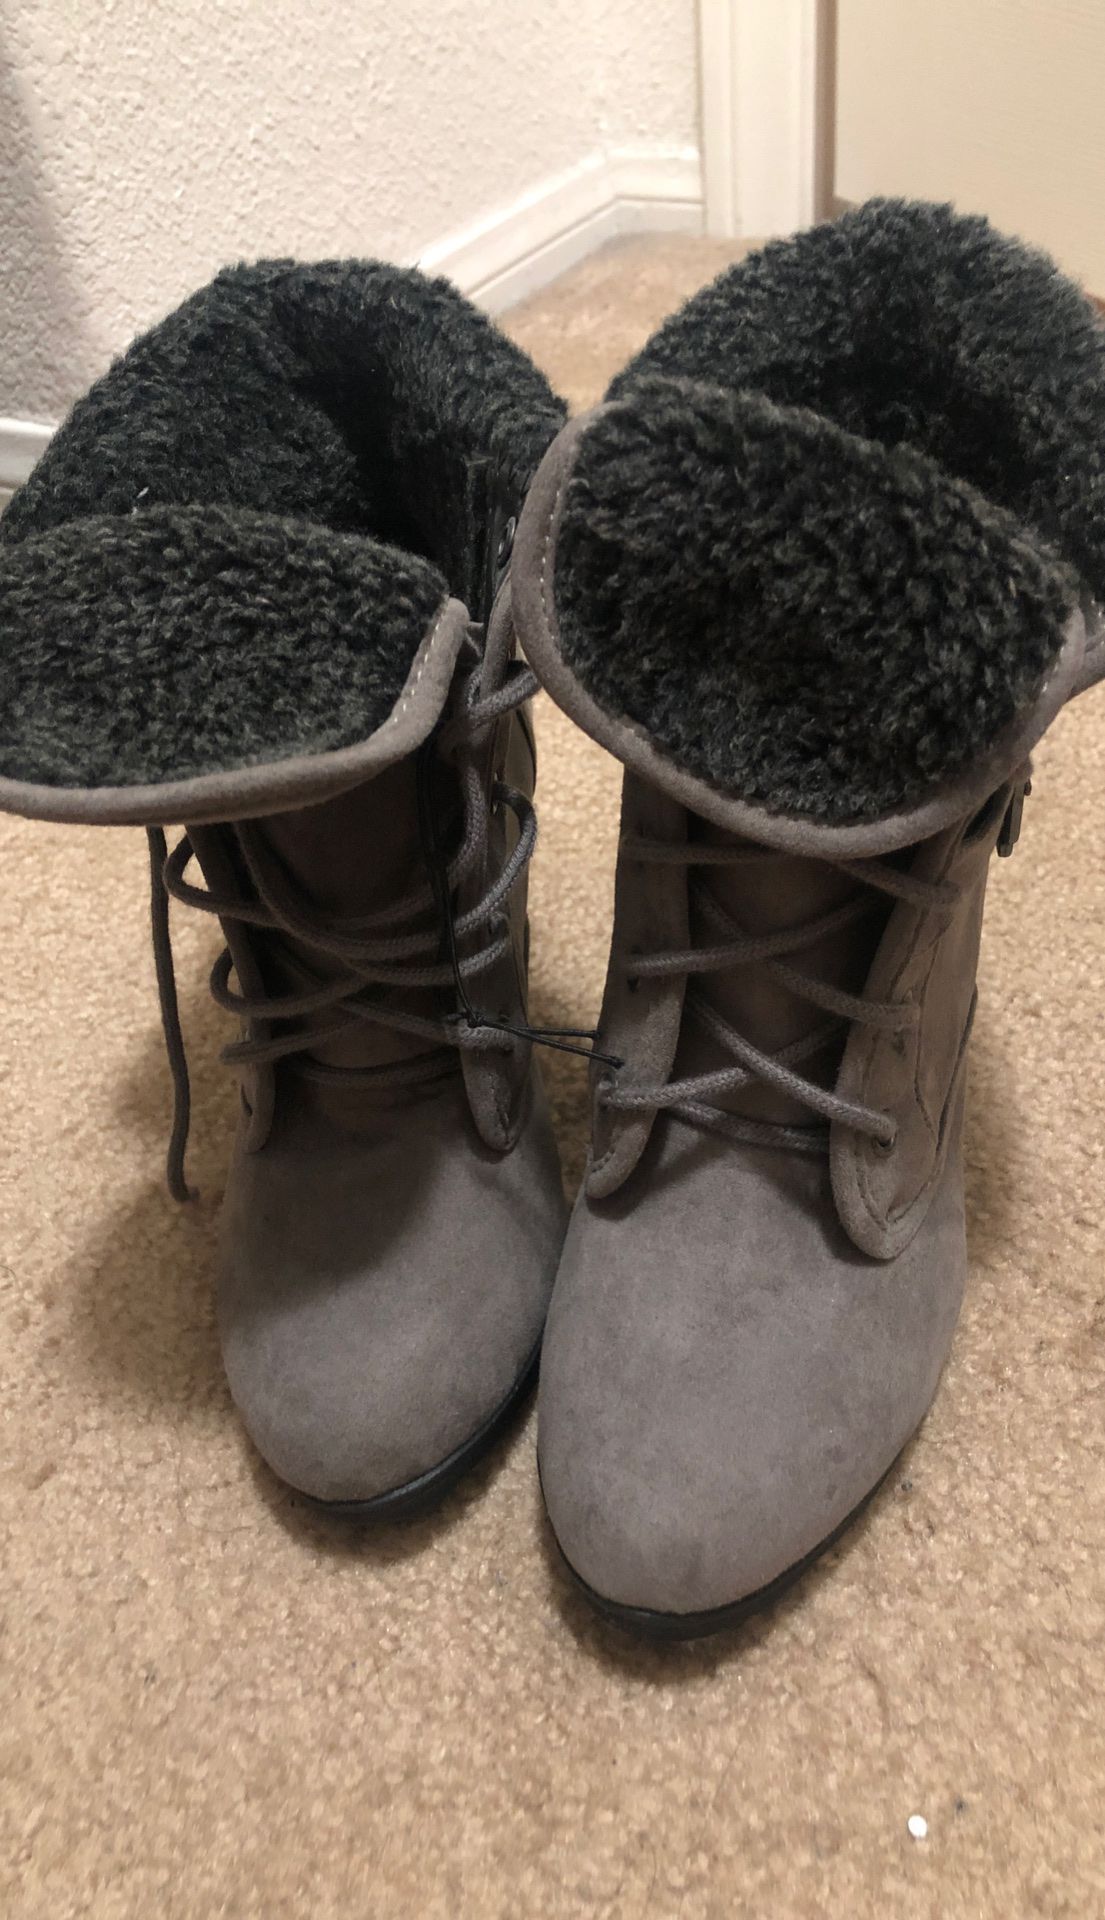 Women’s boot with heel size 5.5